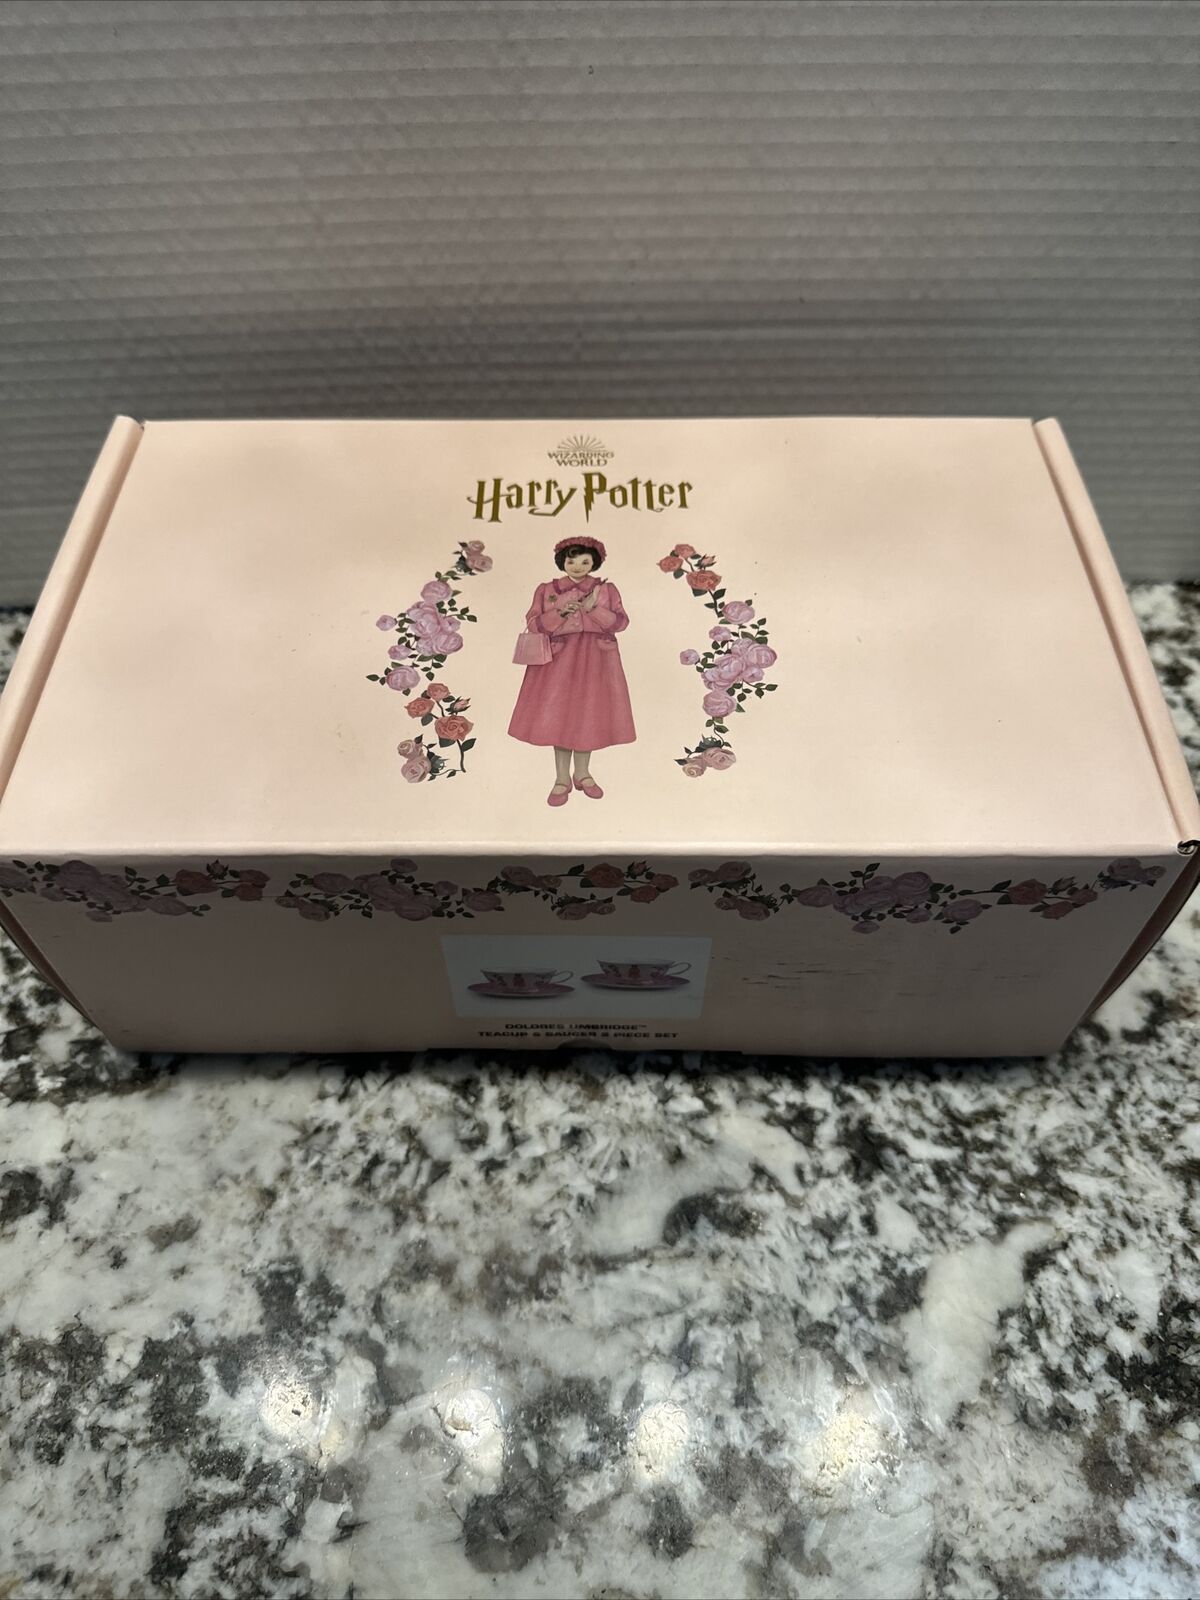 Harry Potter x Dolores Umbridge Tea Pot Collection - Cup and Saucer Set RARE NEW